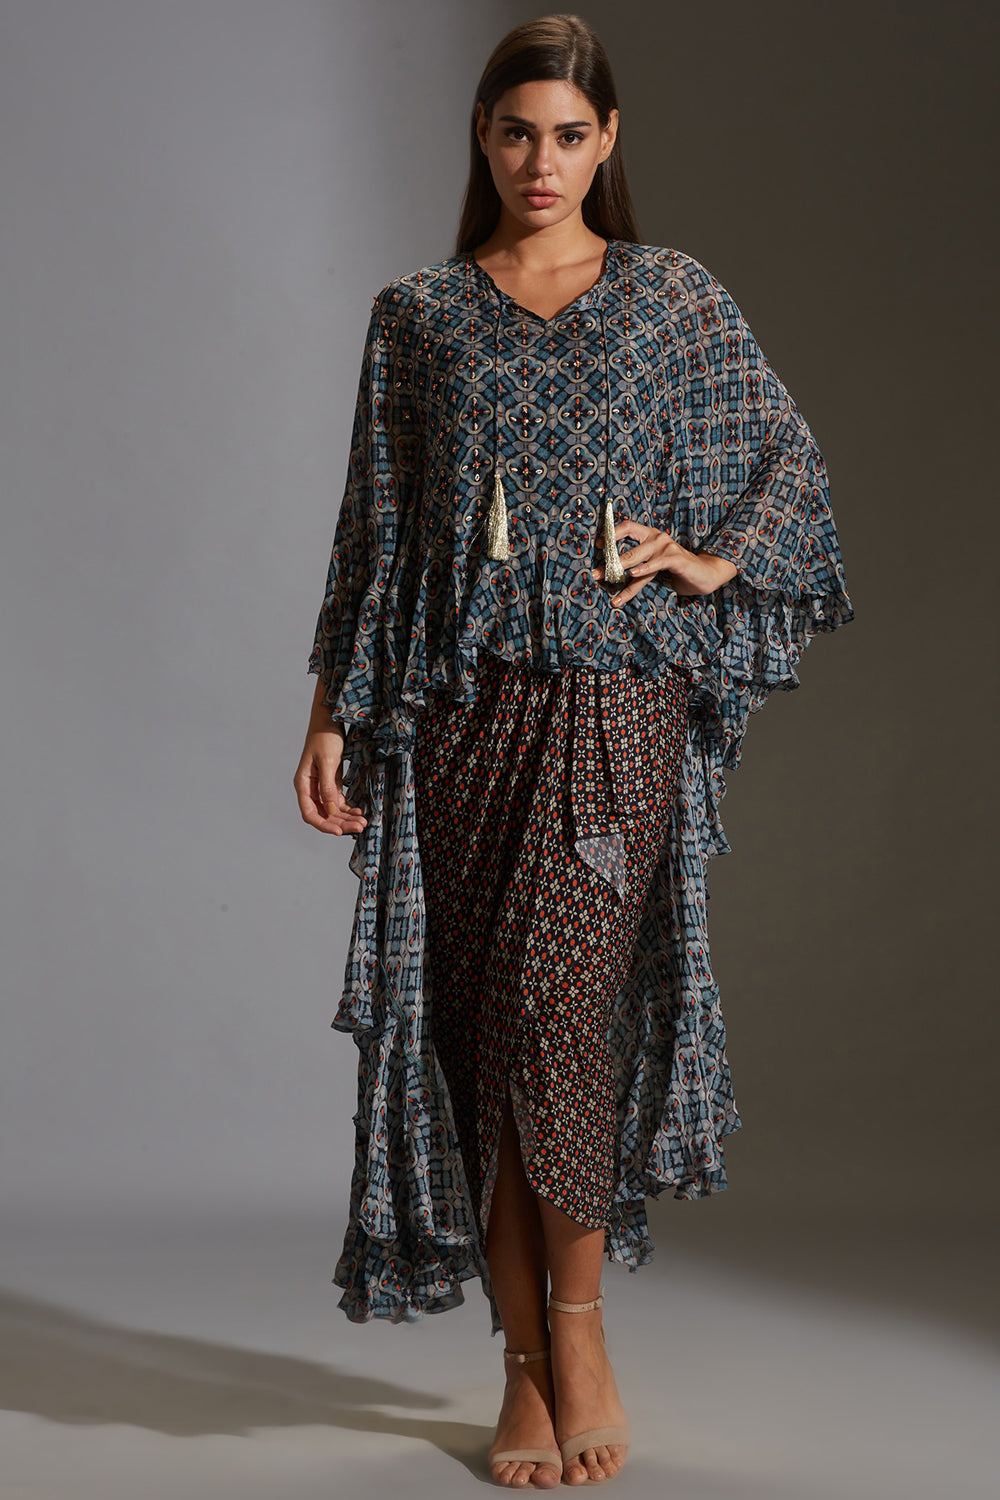 Arabesque Geometrical Drape Dress With Frill Top